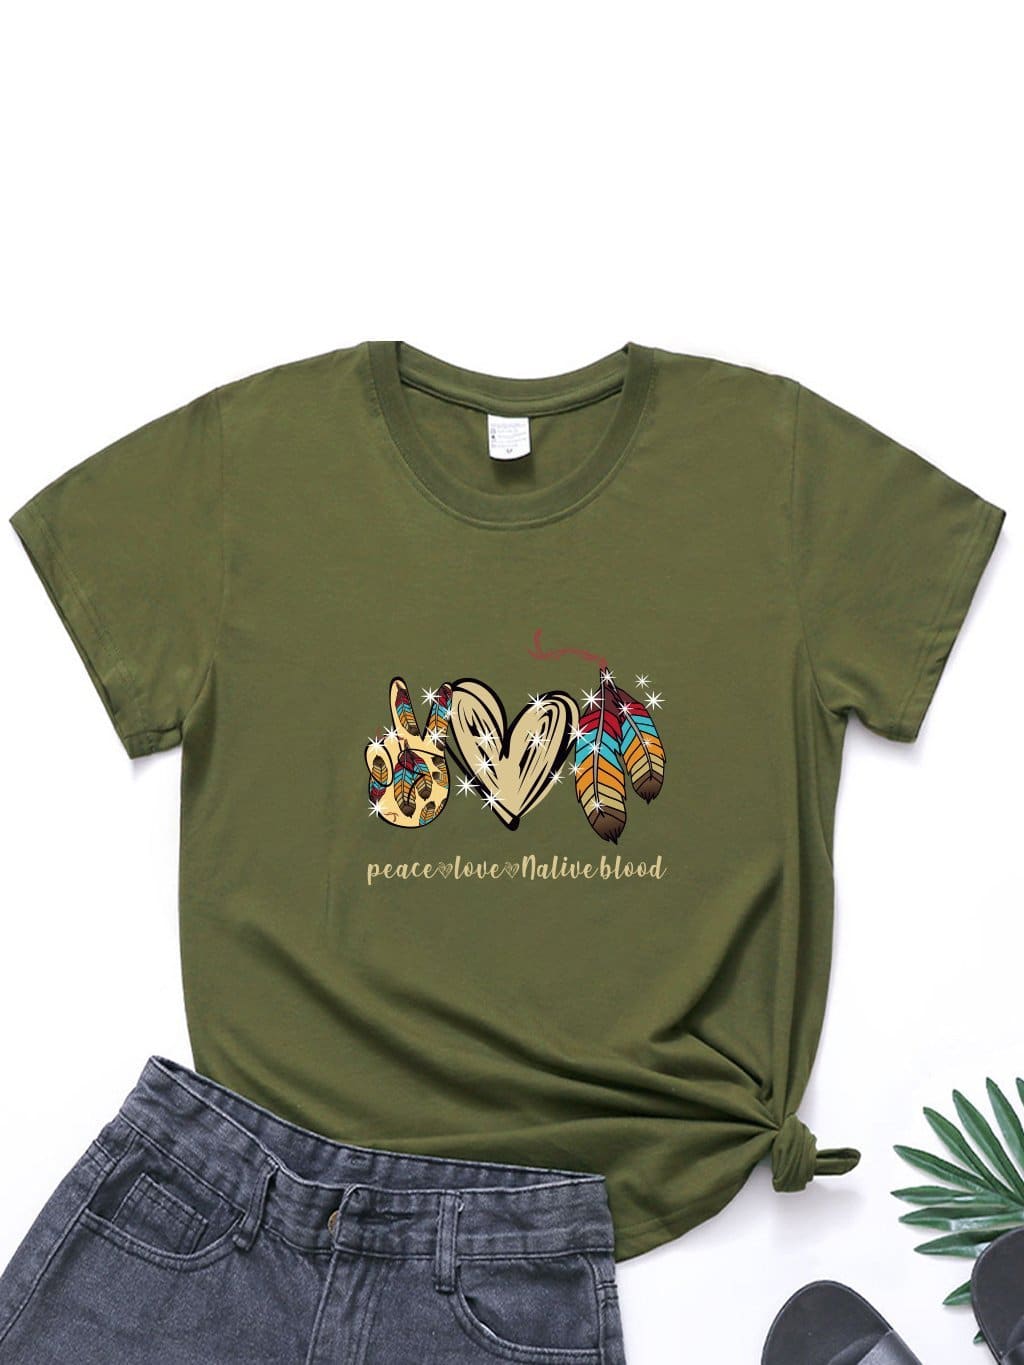 lovevop Printed Women Short Sleeve T-Shirt Casual